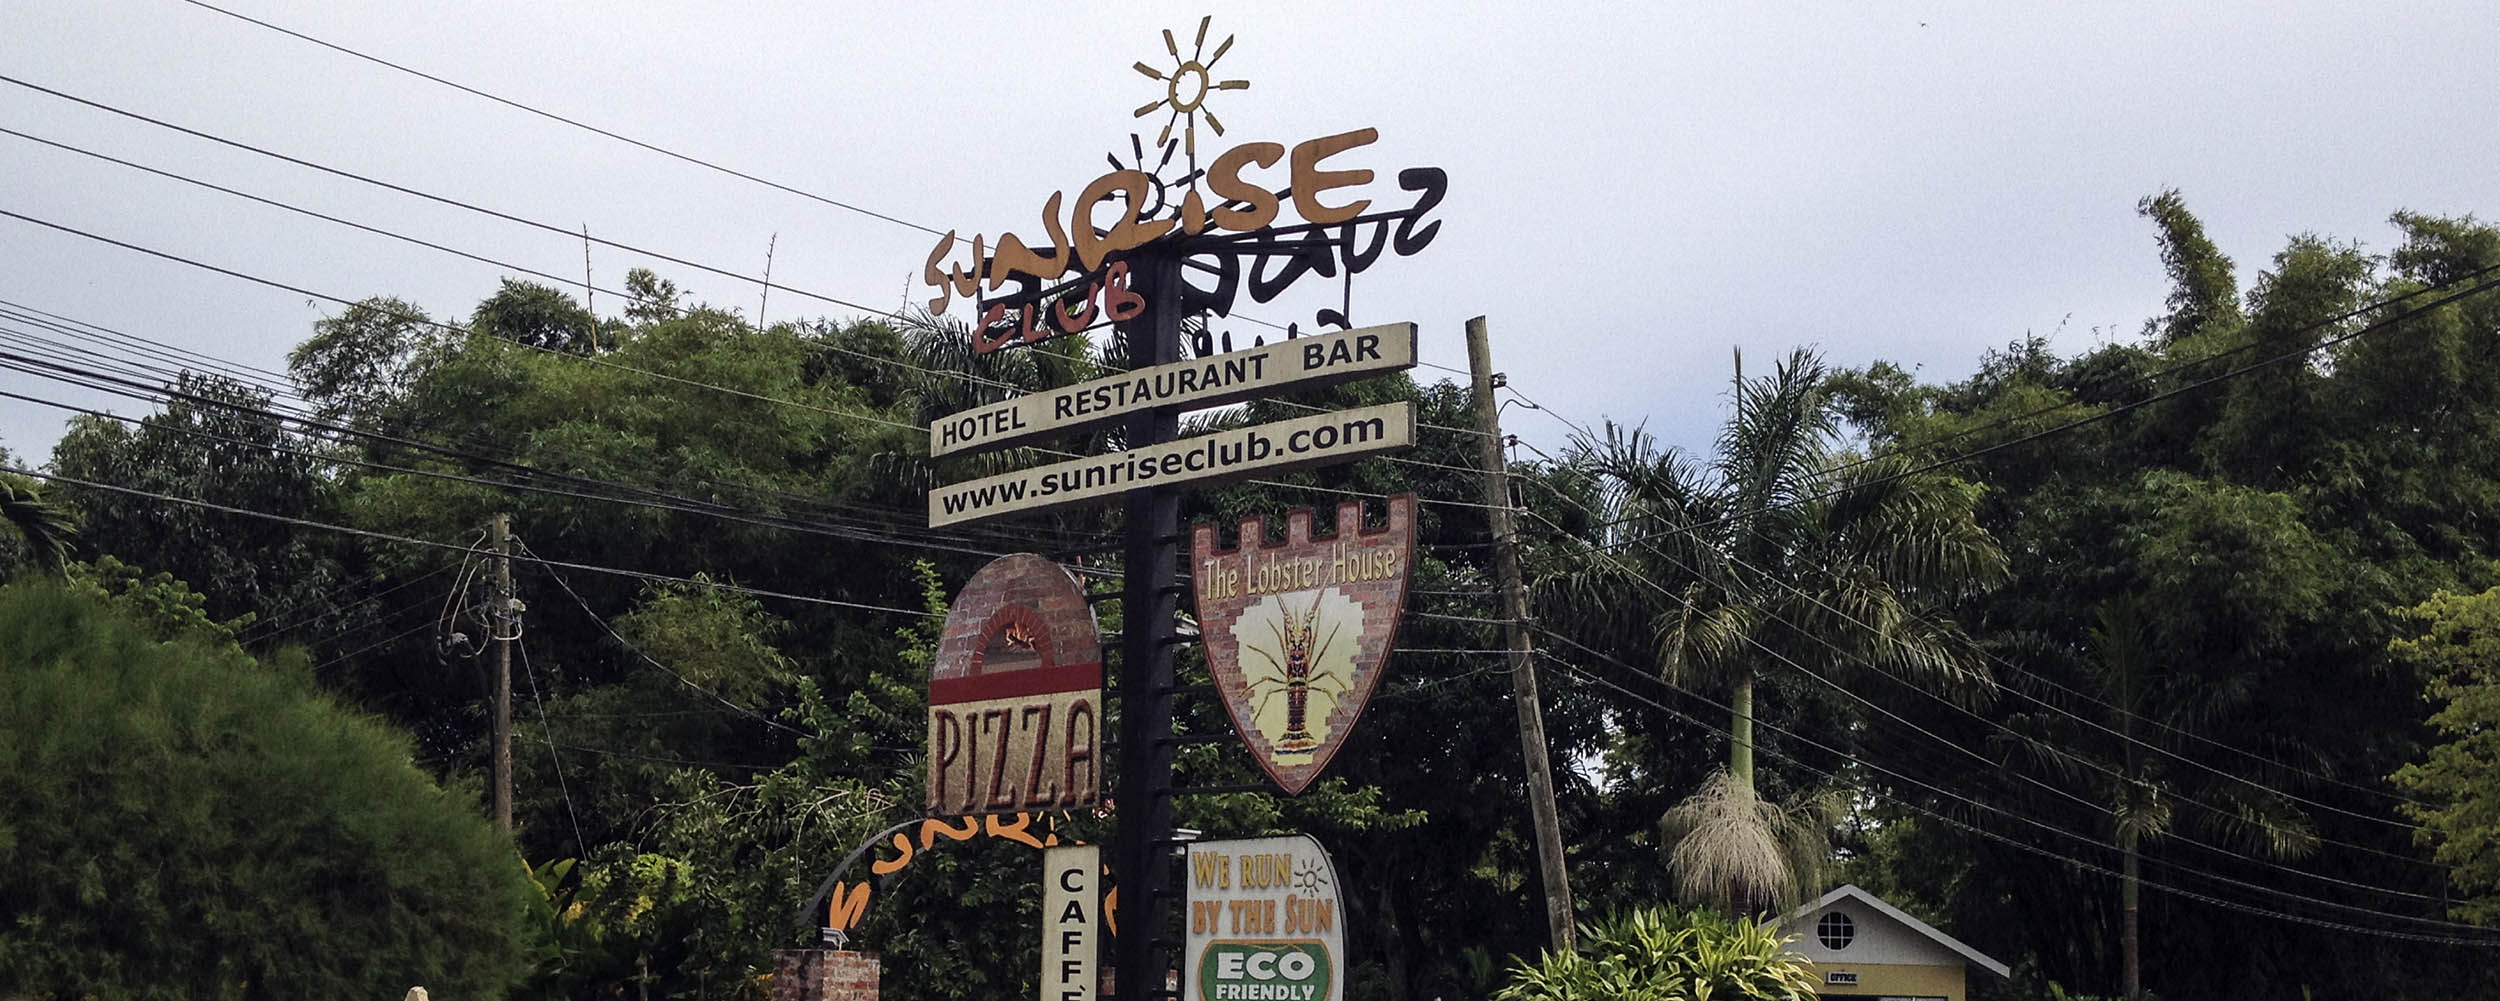 Sunrise Club - The Lobster House Restaurant, Norman Manley Boulevard, Negril Jamaica